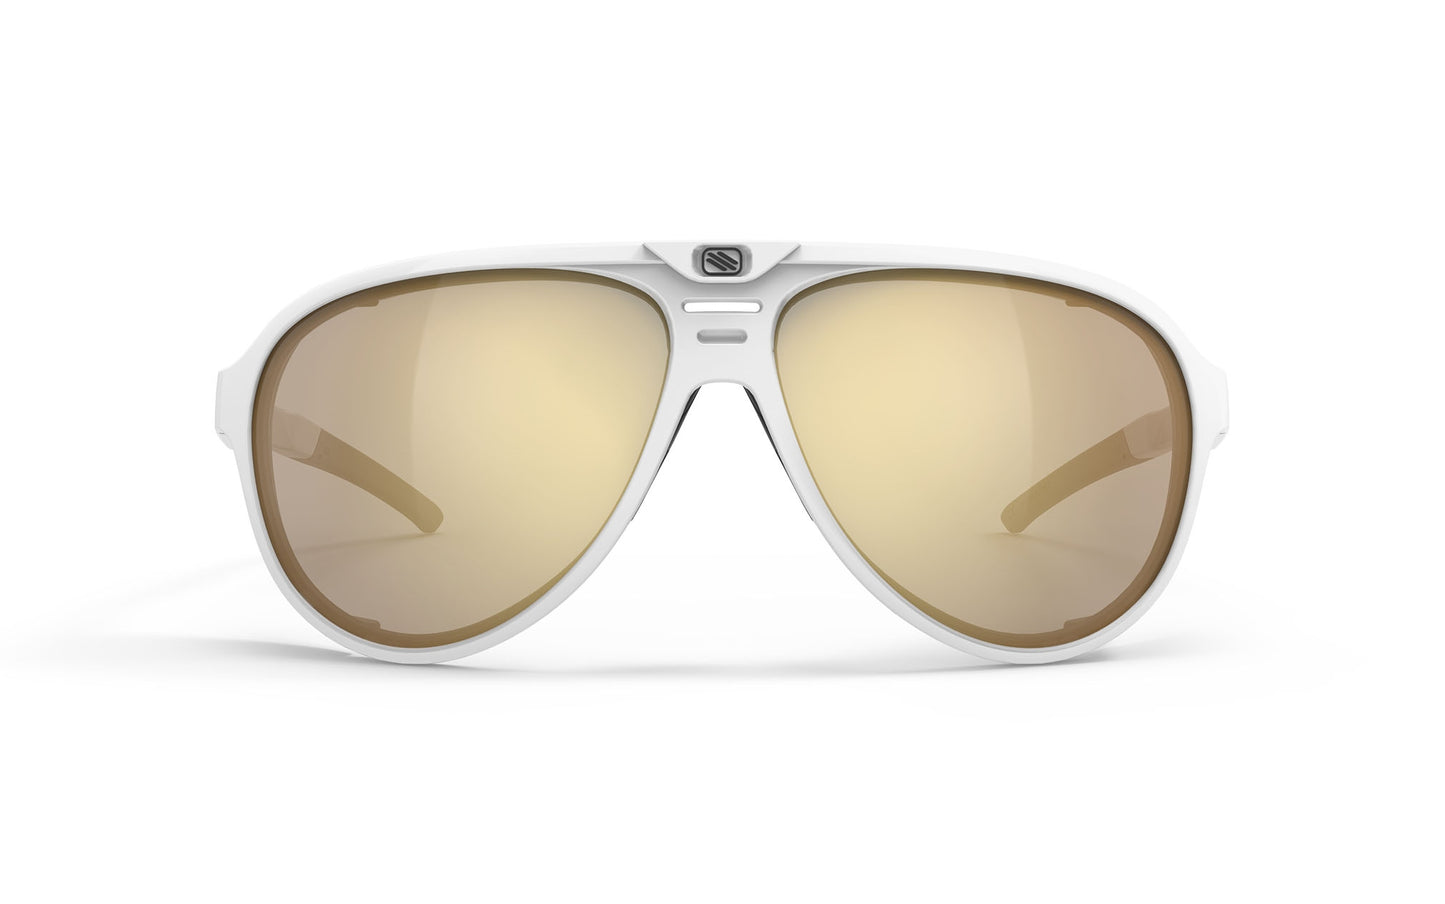 Rudy Project Stardash White Gloss - Impactx Photochromic 2 Laser Crimson Sunglasses